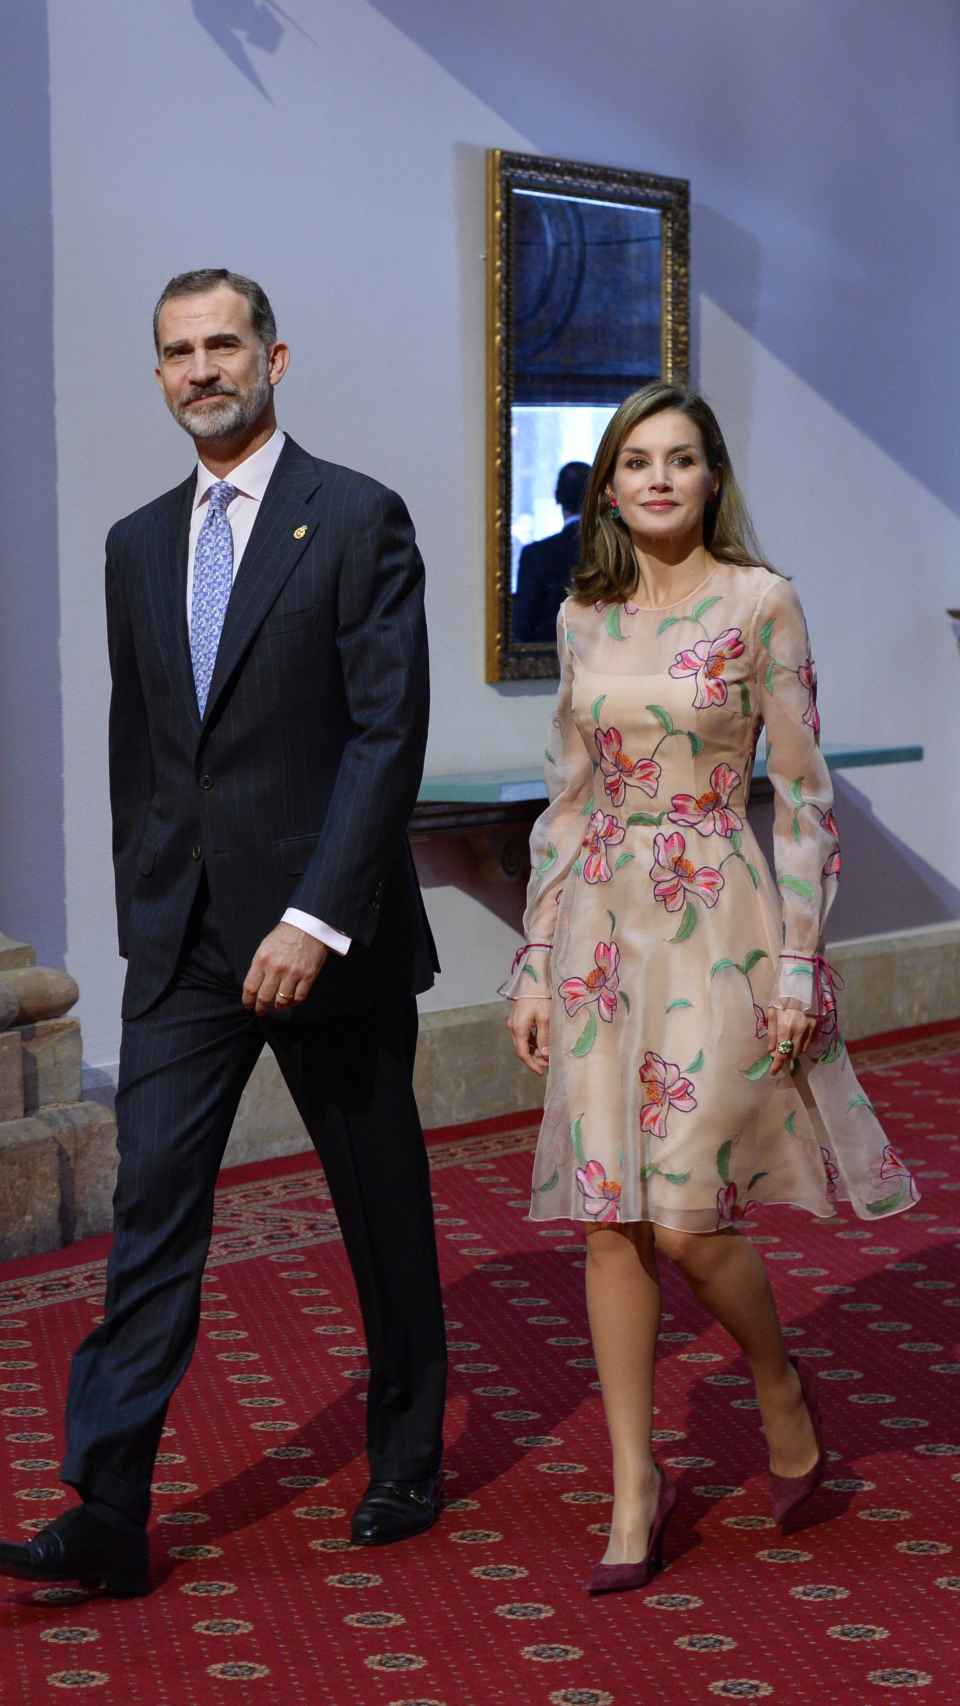 El rey Felipe VI y la reina Letizia, de Carolina Herrera.